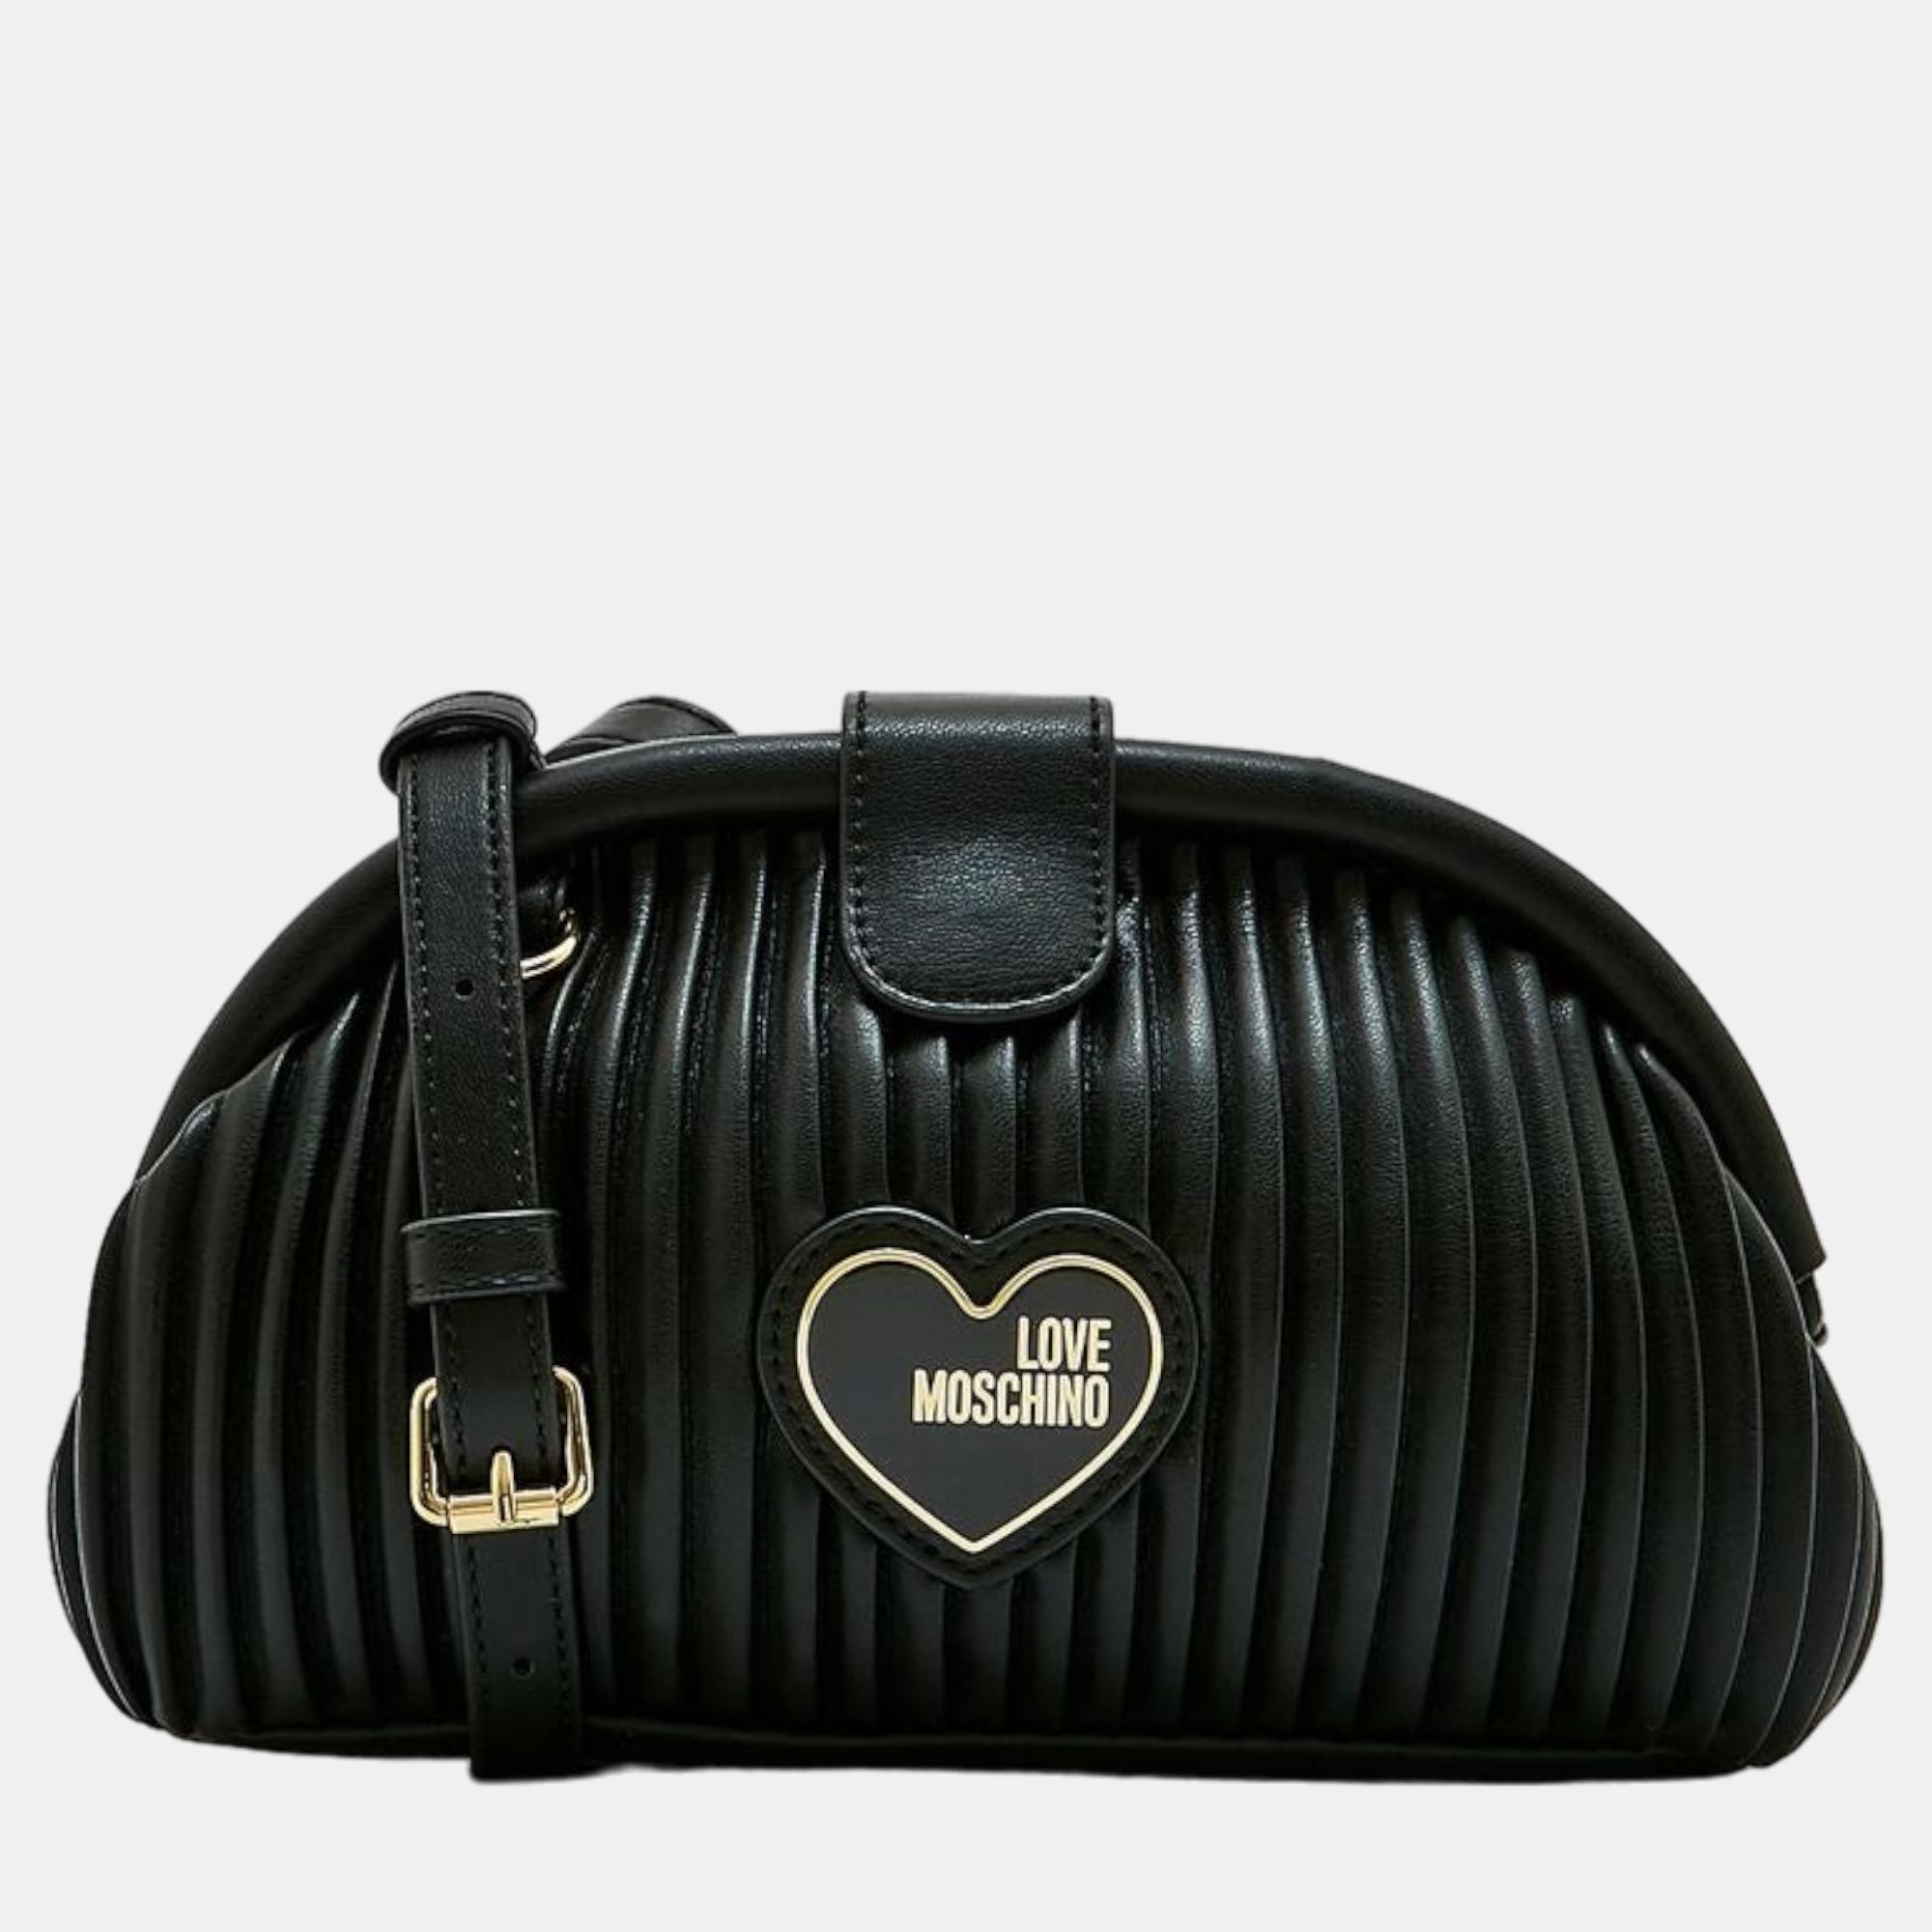 Love moschino black pu leather shoulder bag